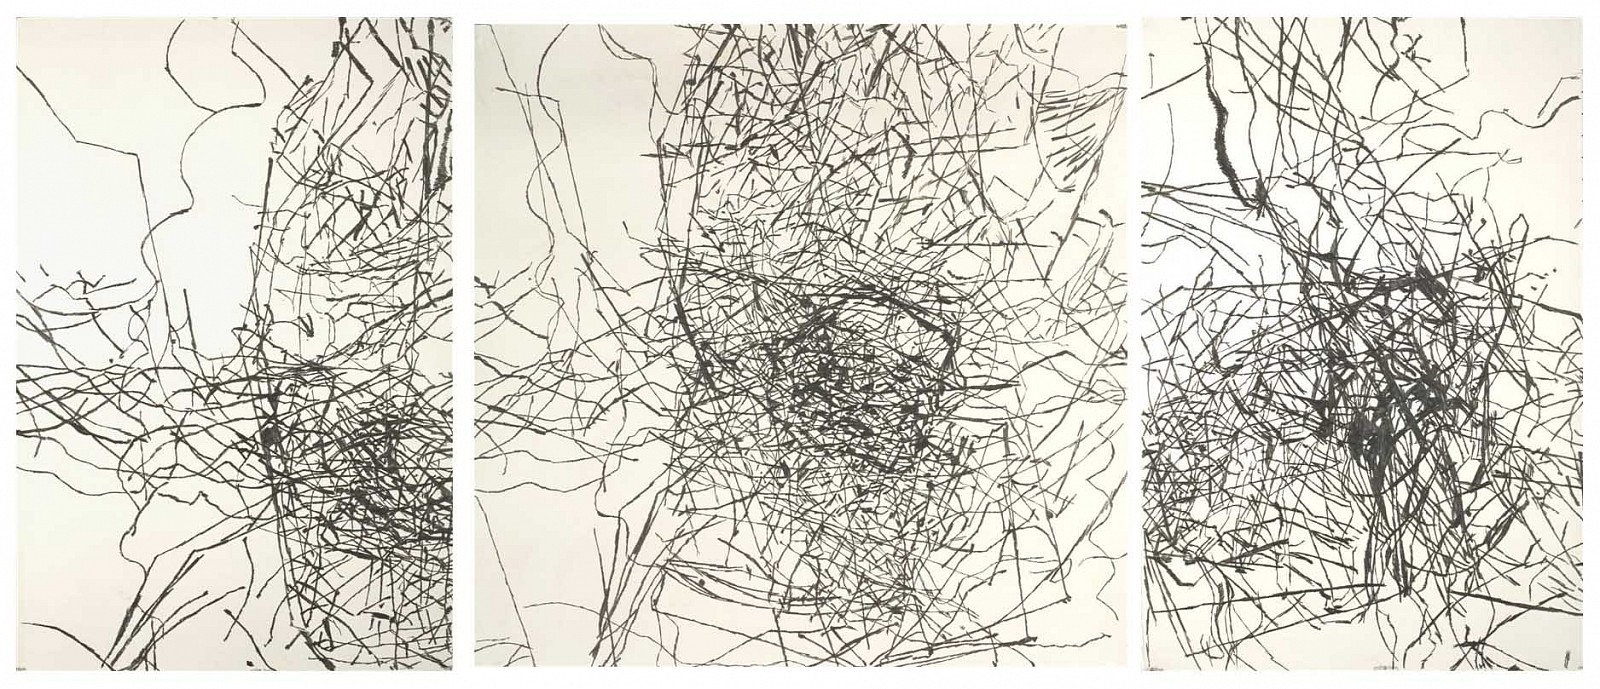 Daniella Sheinman, Untitled
2010, Graphite on paper